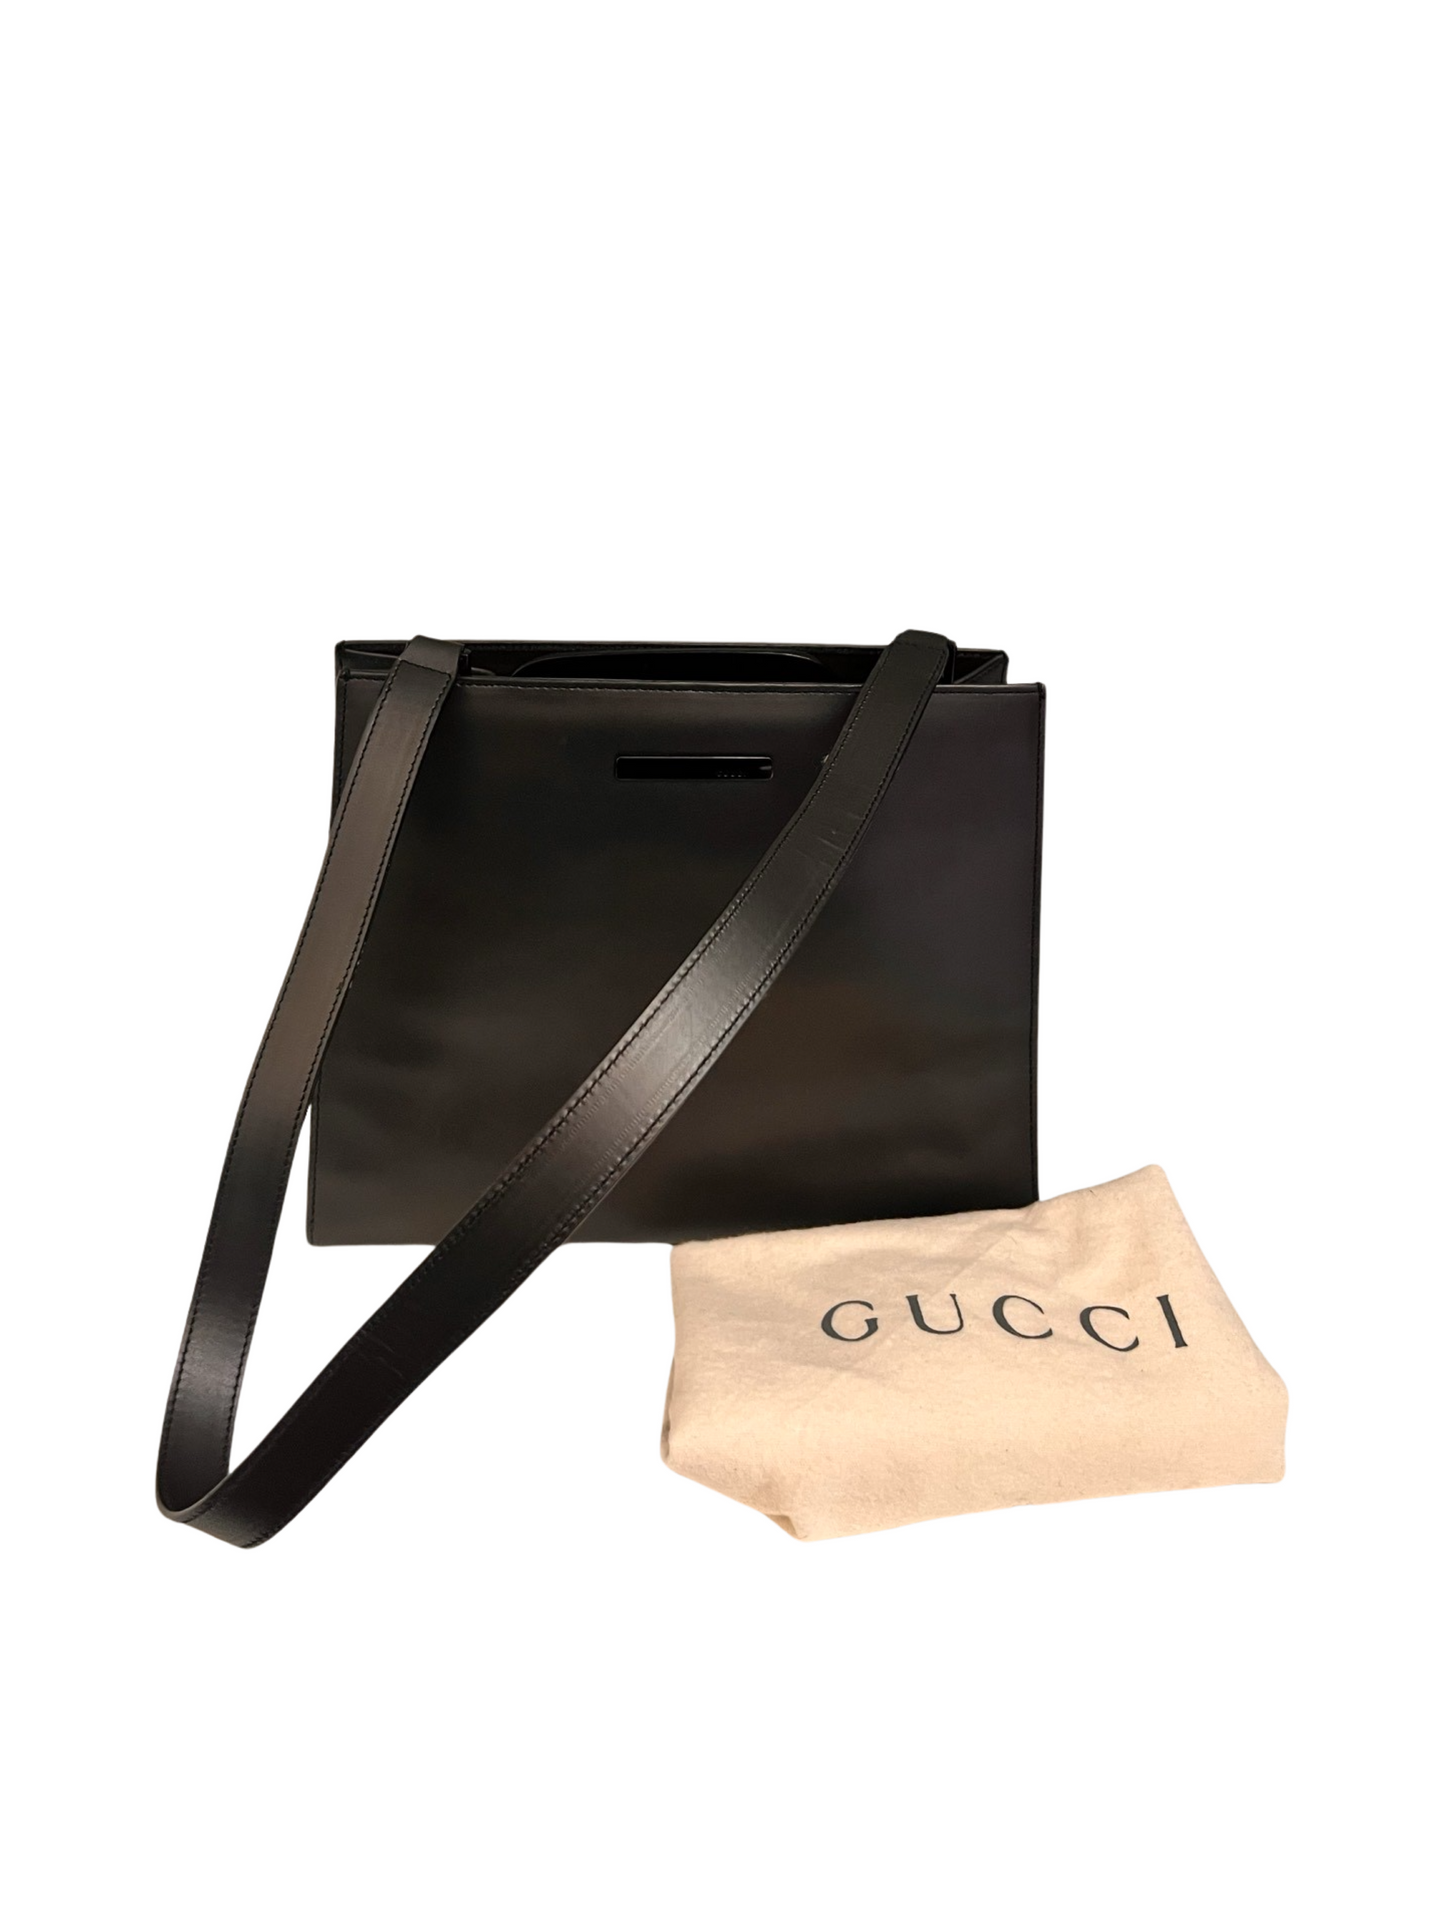 GUCCI - Gucci bag vintage